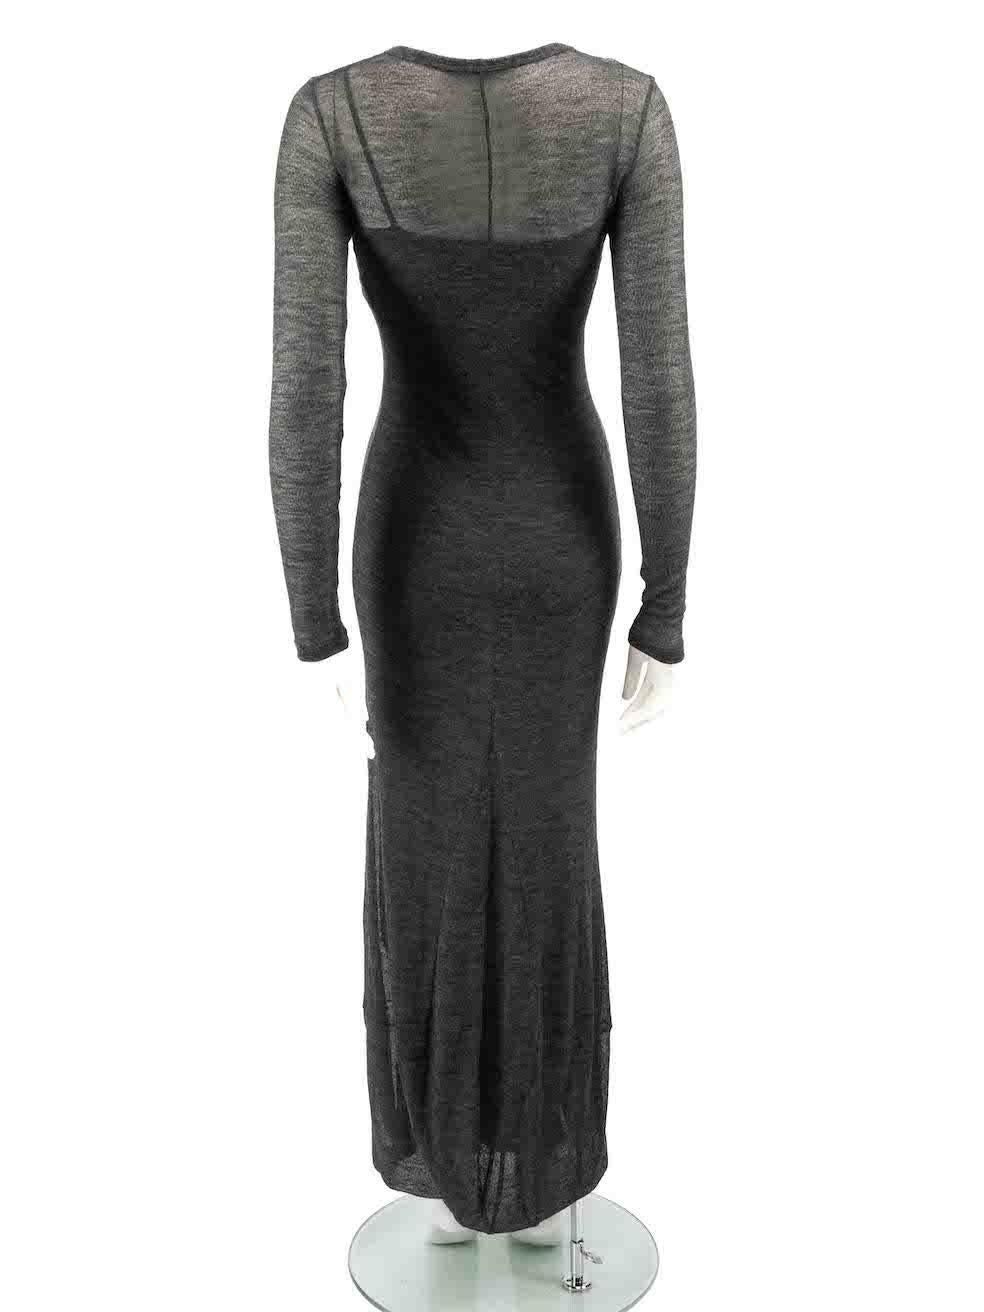 Alberta Ferretti Grey Sheer Maxi Dress Size S In Good Condition For Sale In London, GB